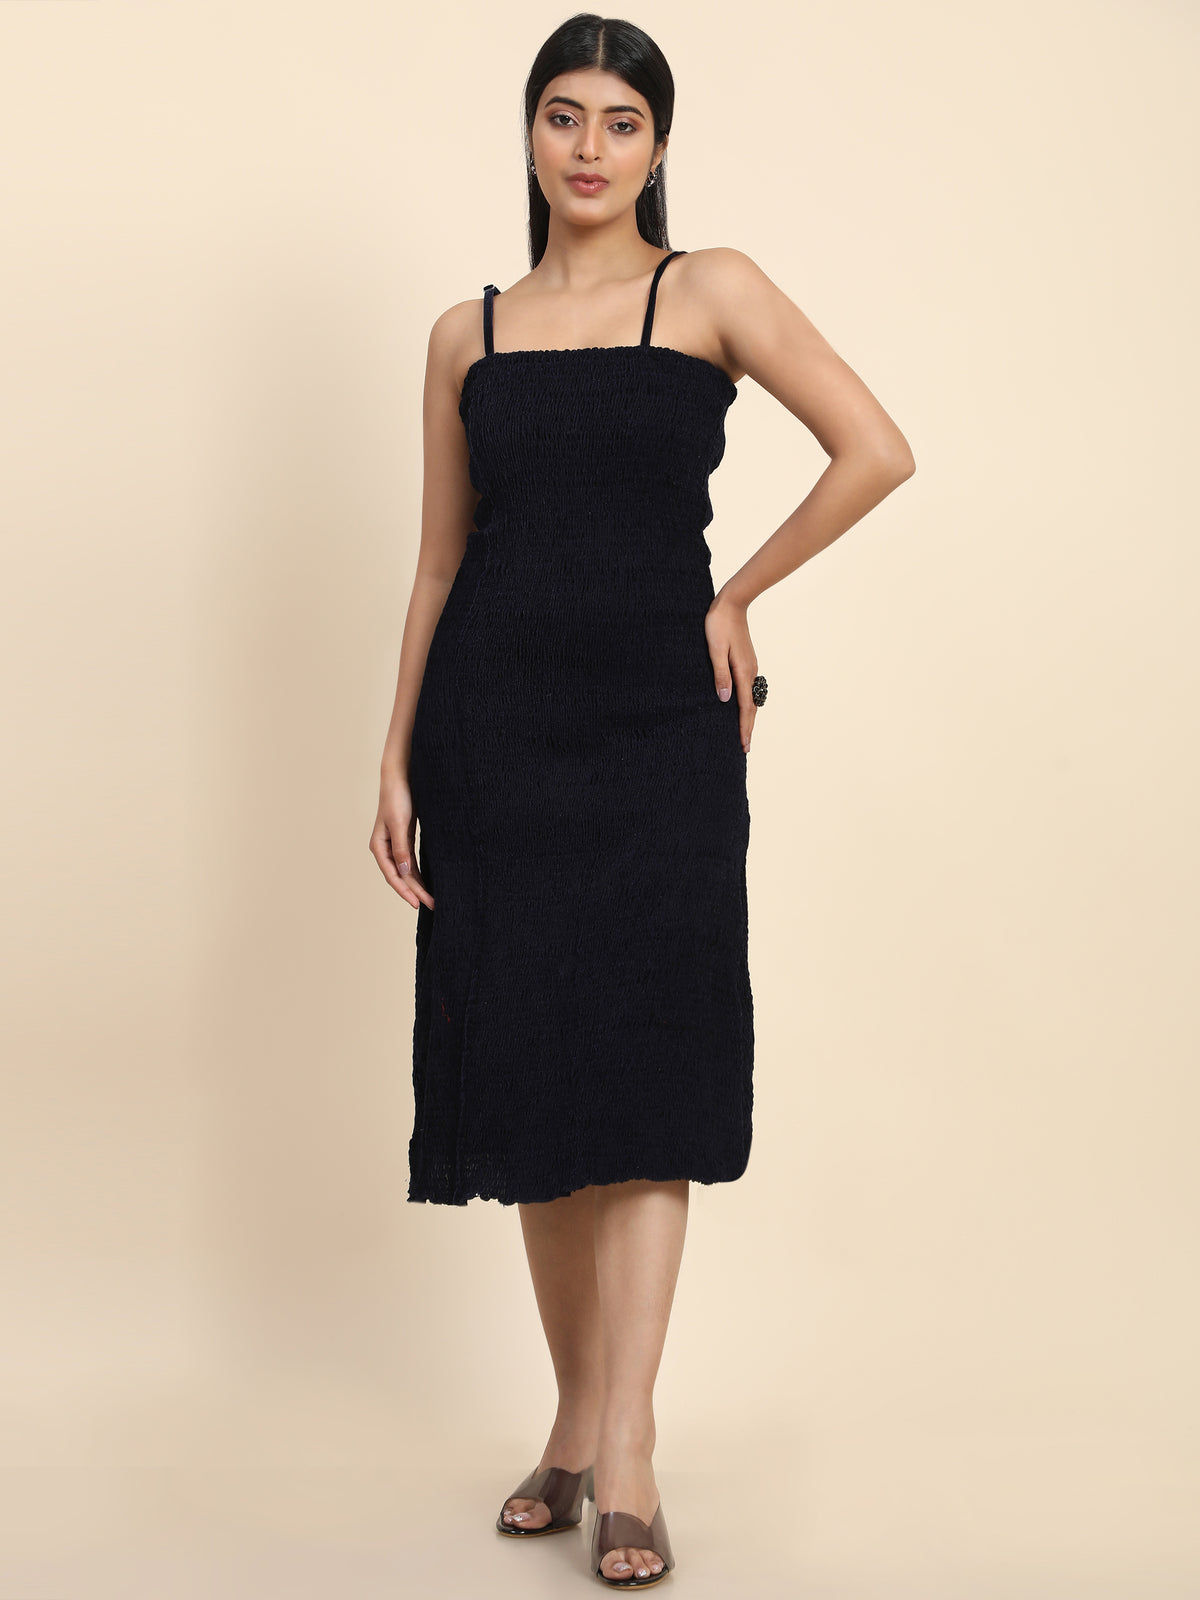 Aawari Women’s Velvet Solid Black Adjustable Spaghetti Straps Square Bodycon Dress